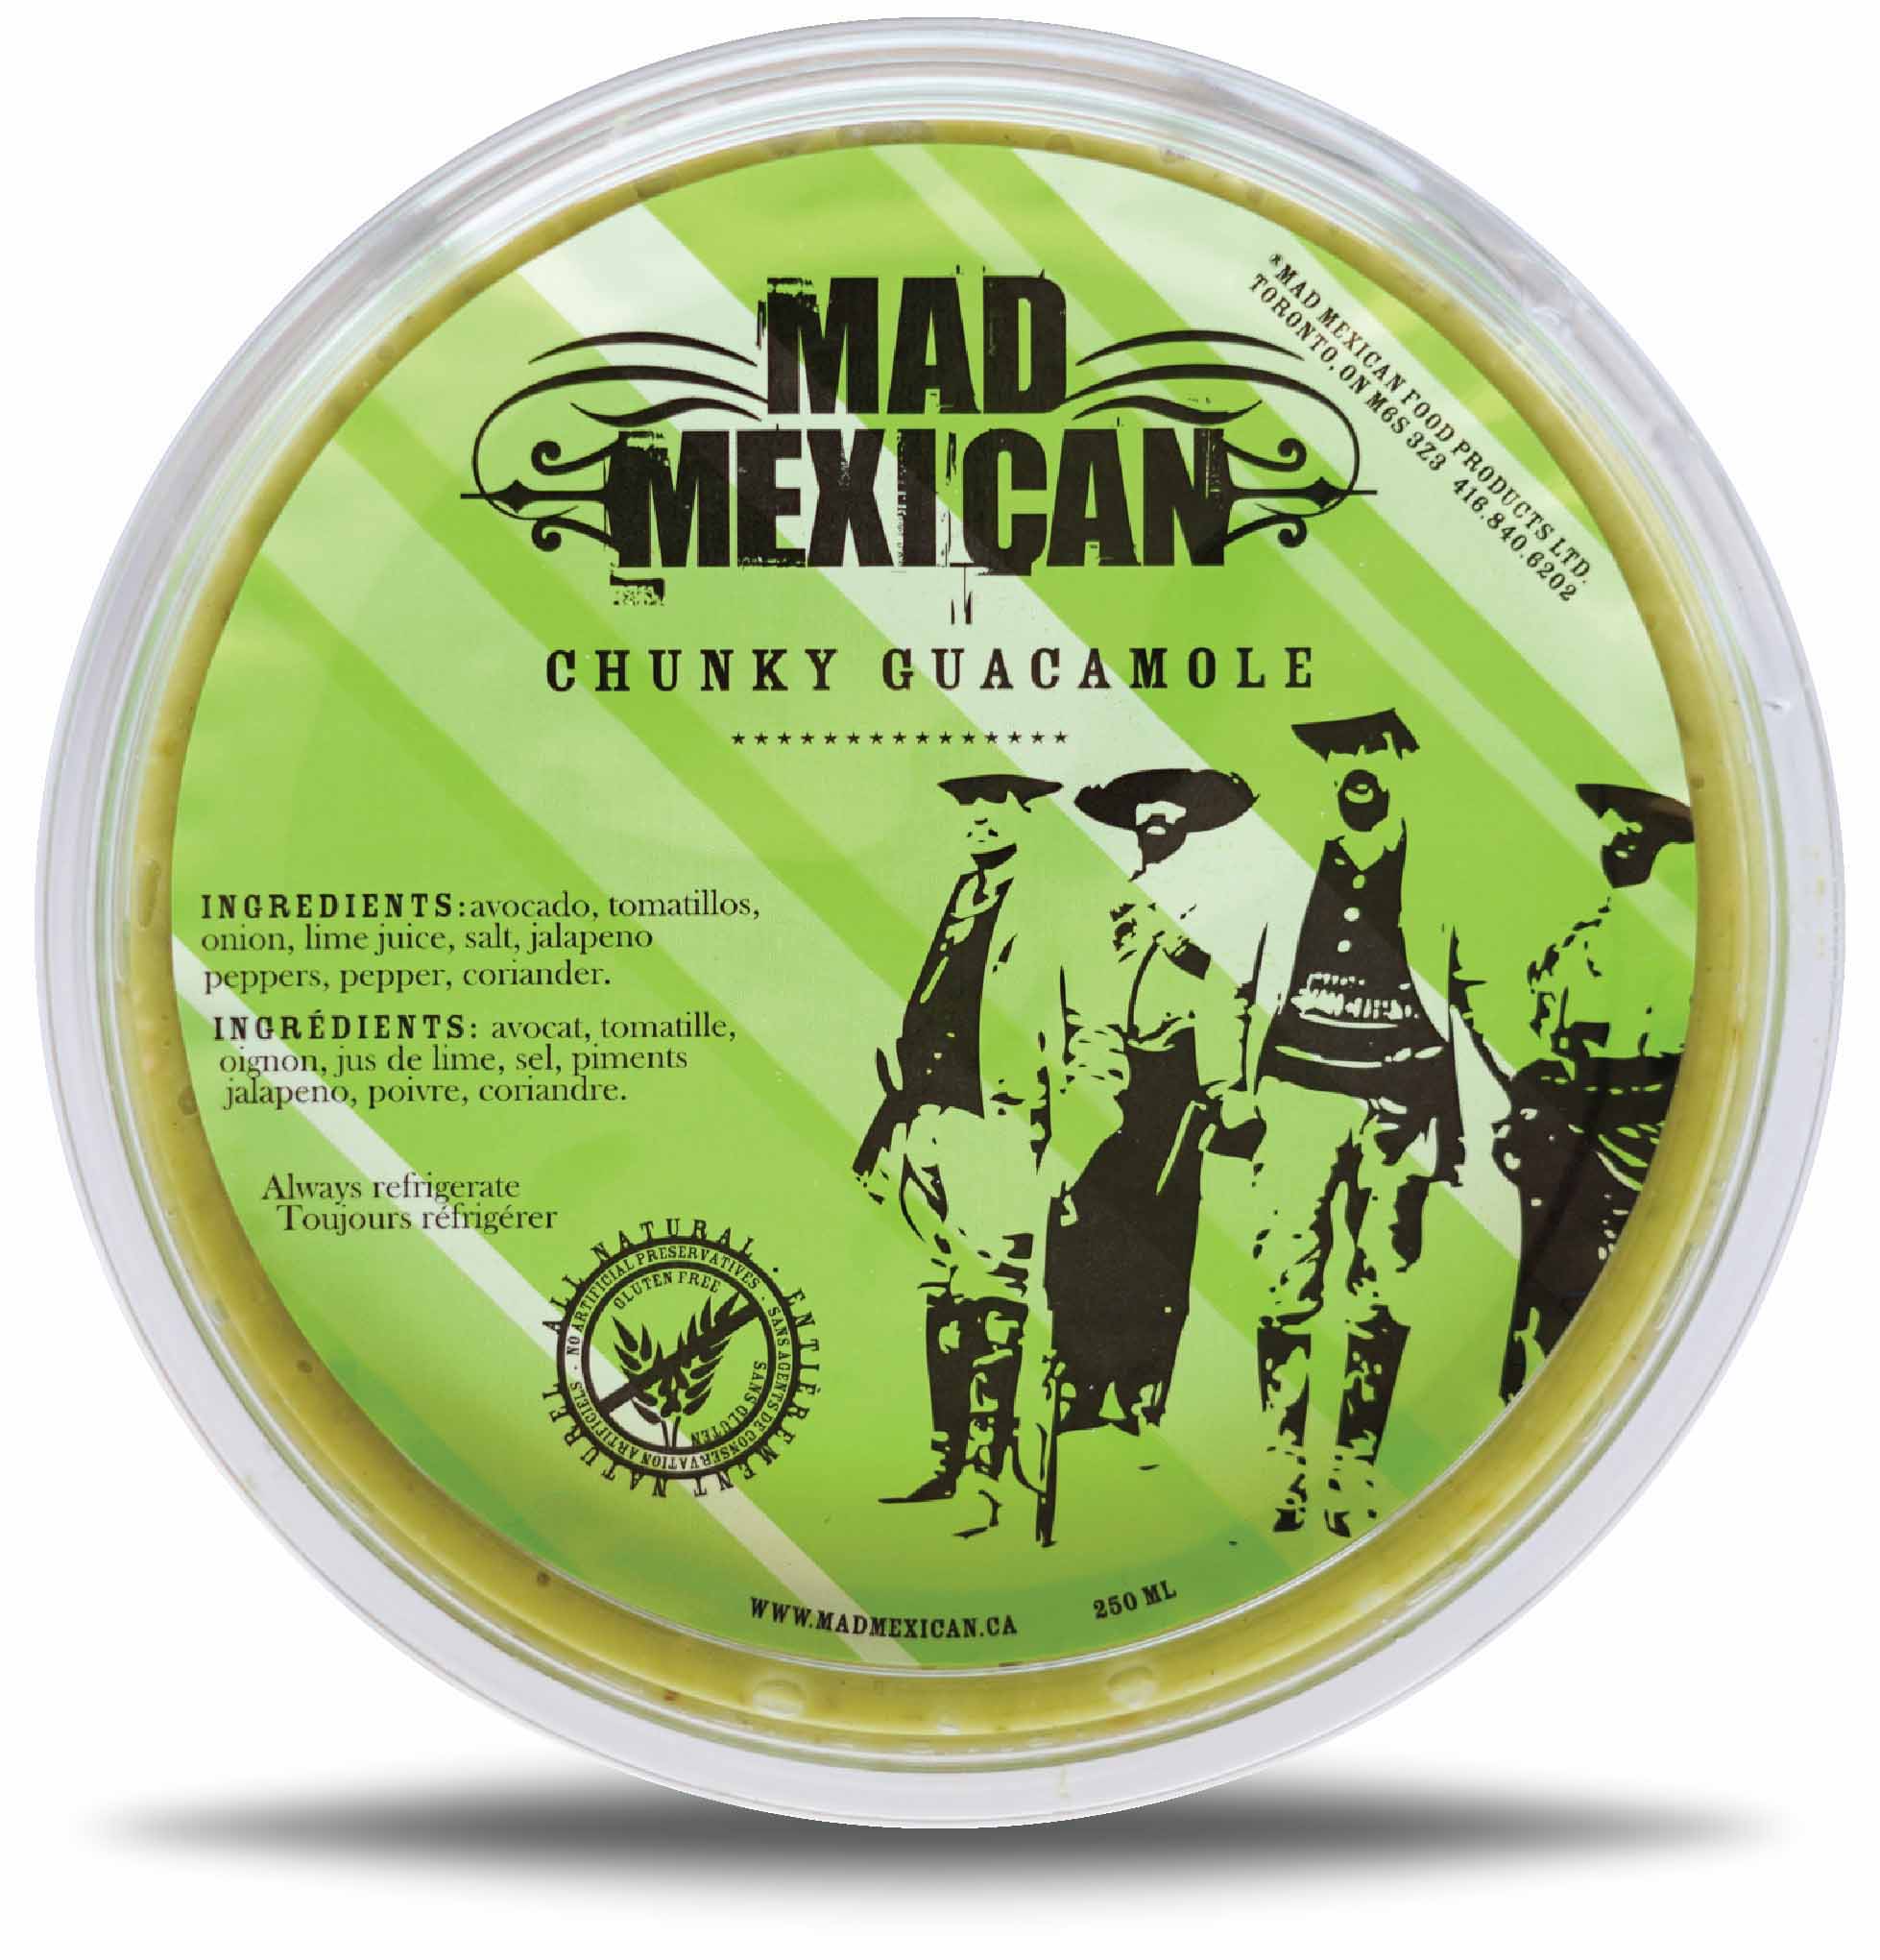 Authentic Mexican guacamole 